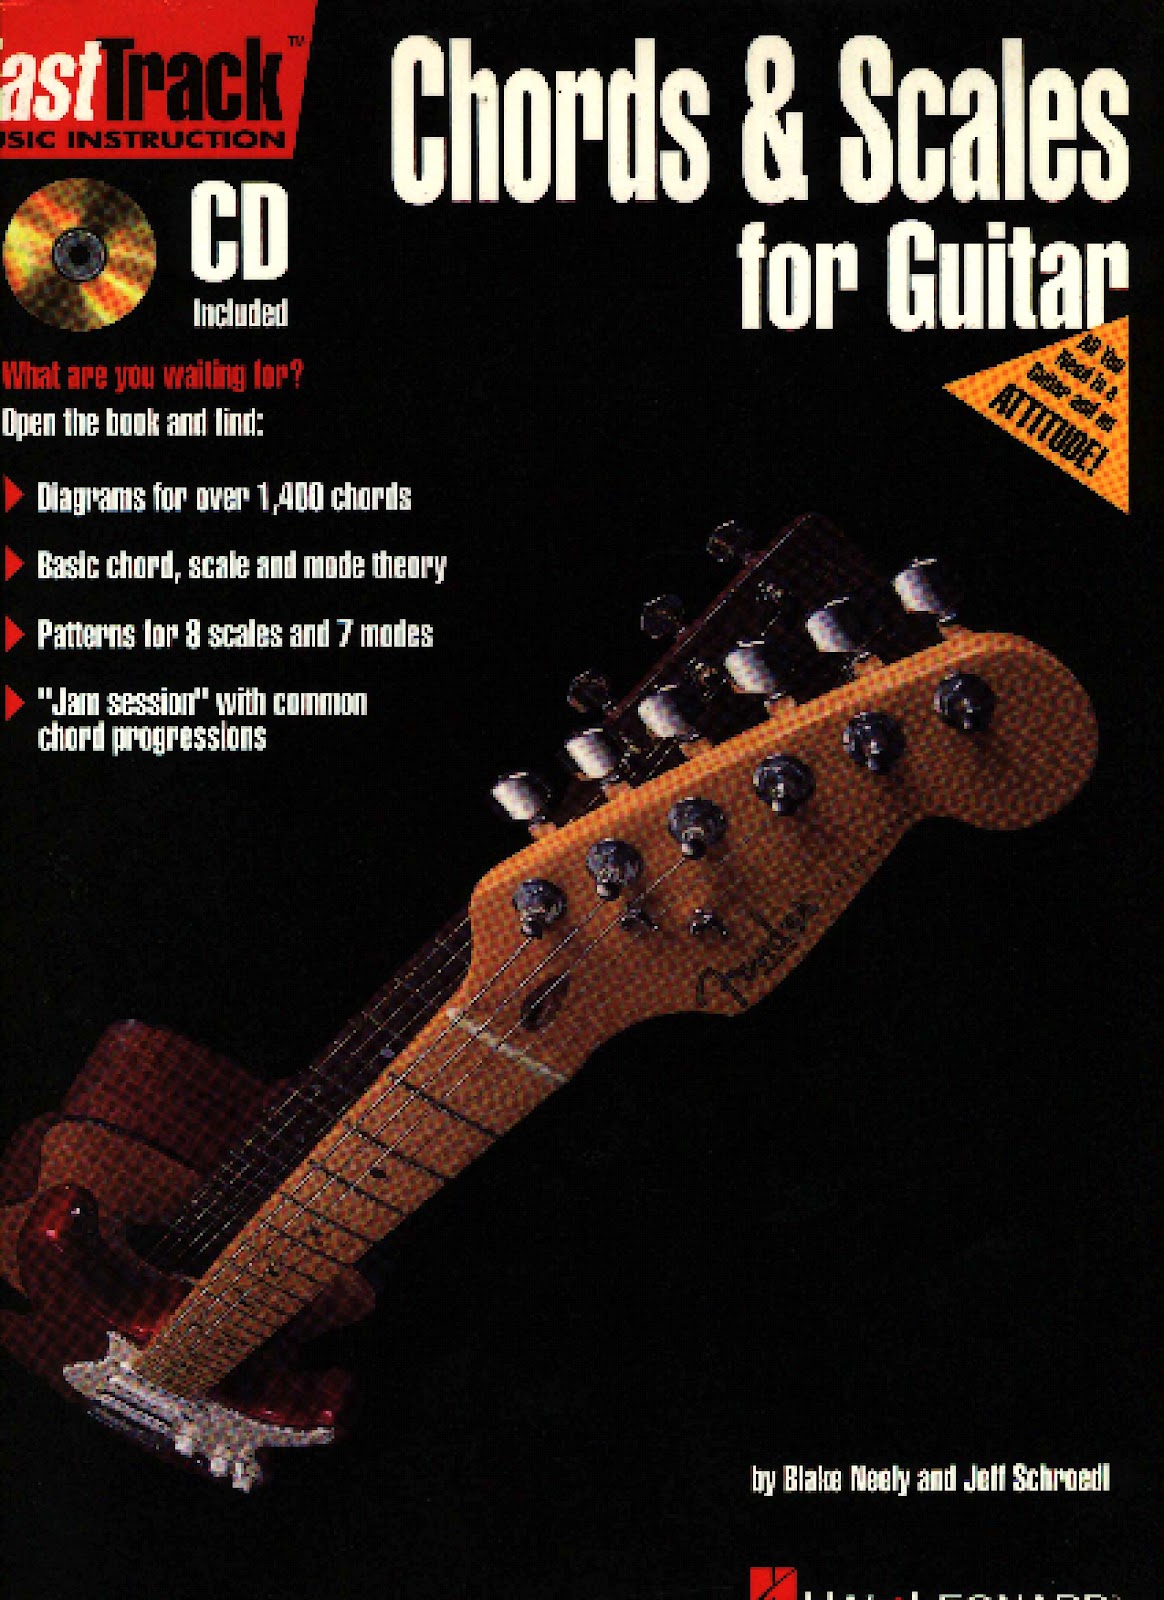 Steve Vai Guitar Lessons Pdf